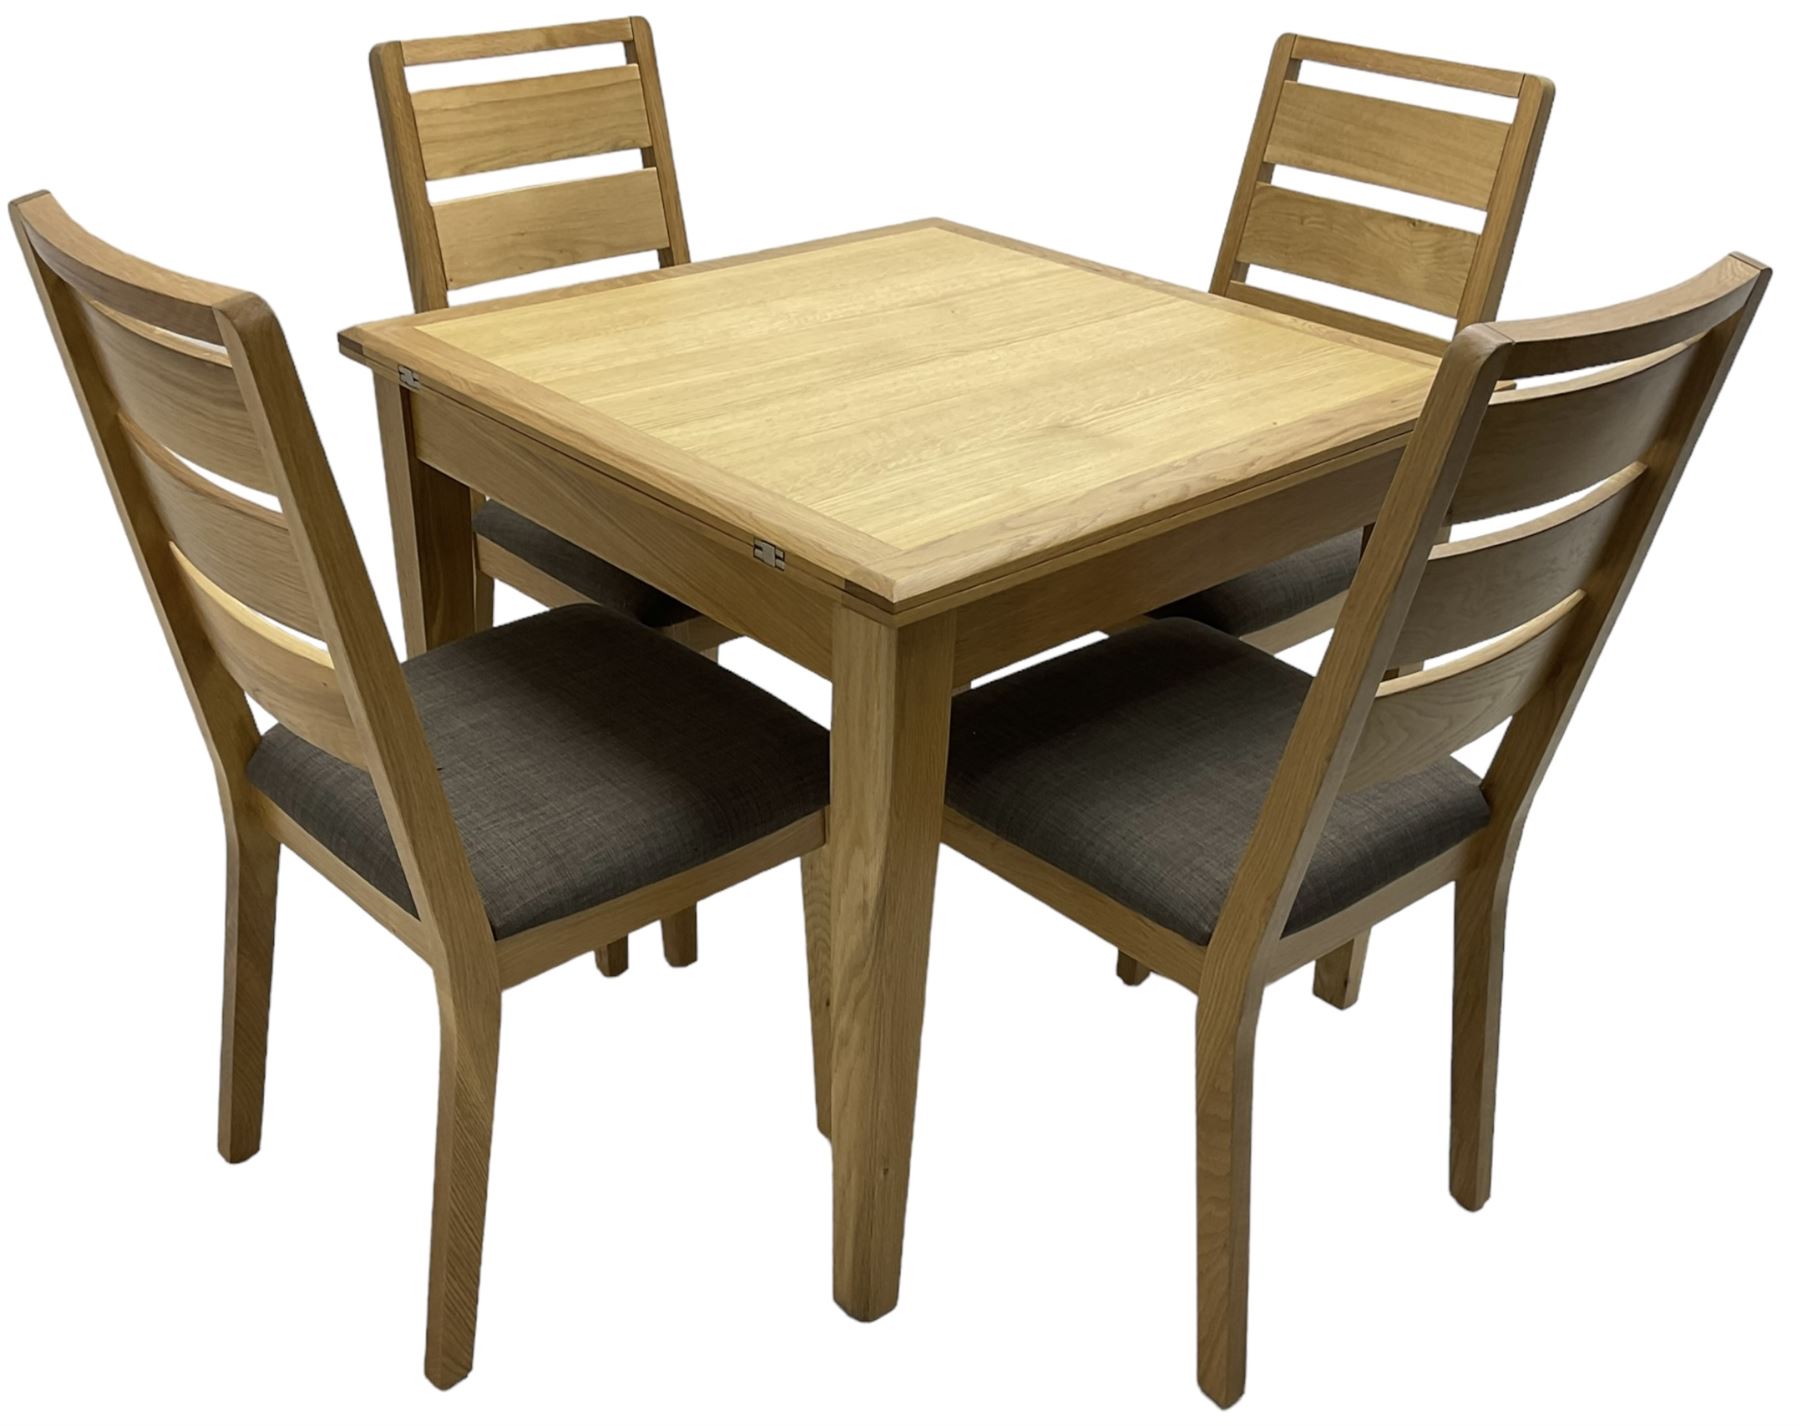 Light oak extending dining table - Image 3 of 6